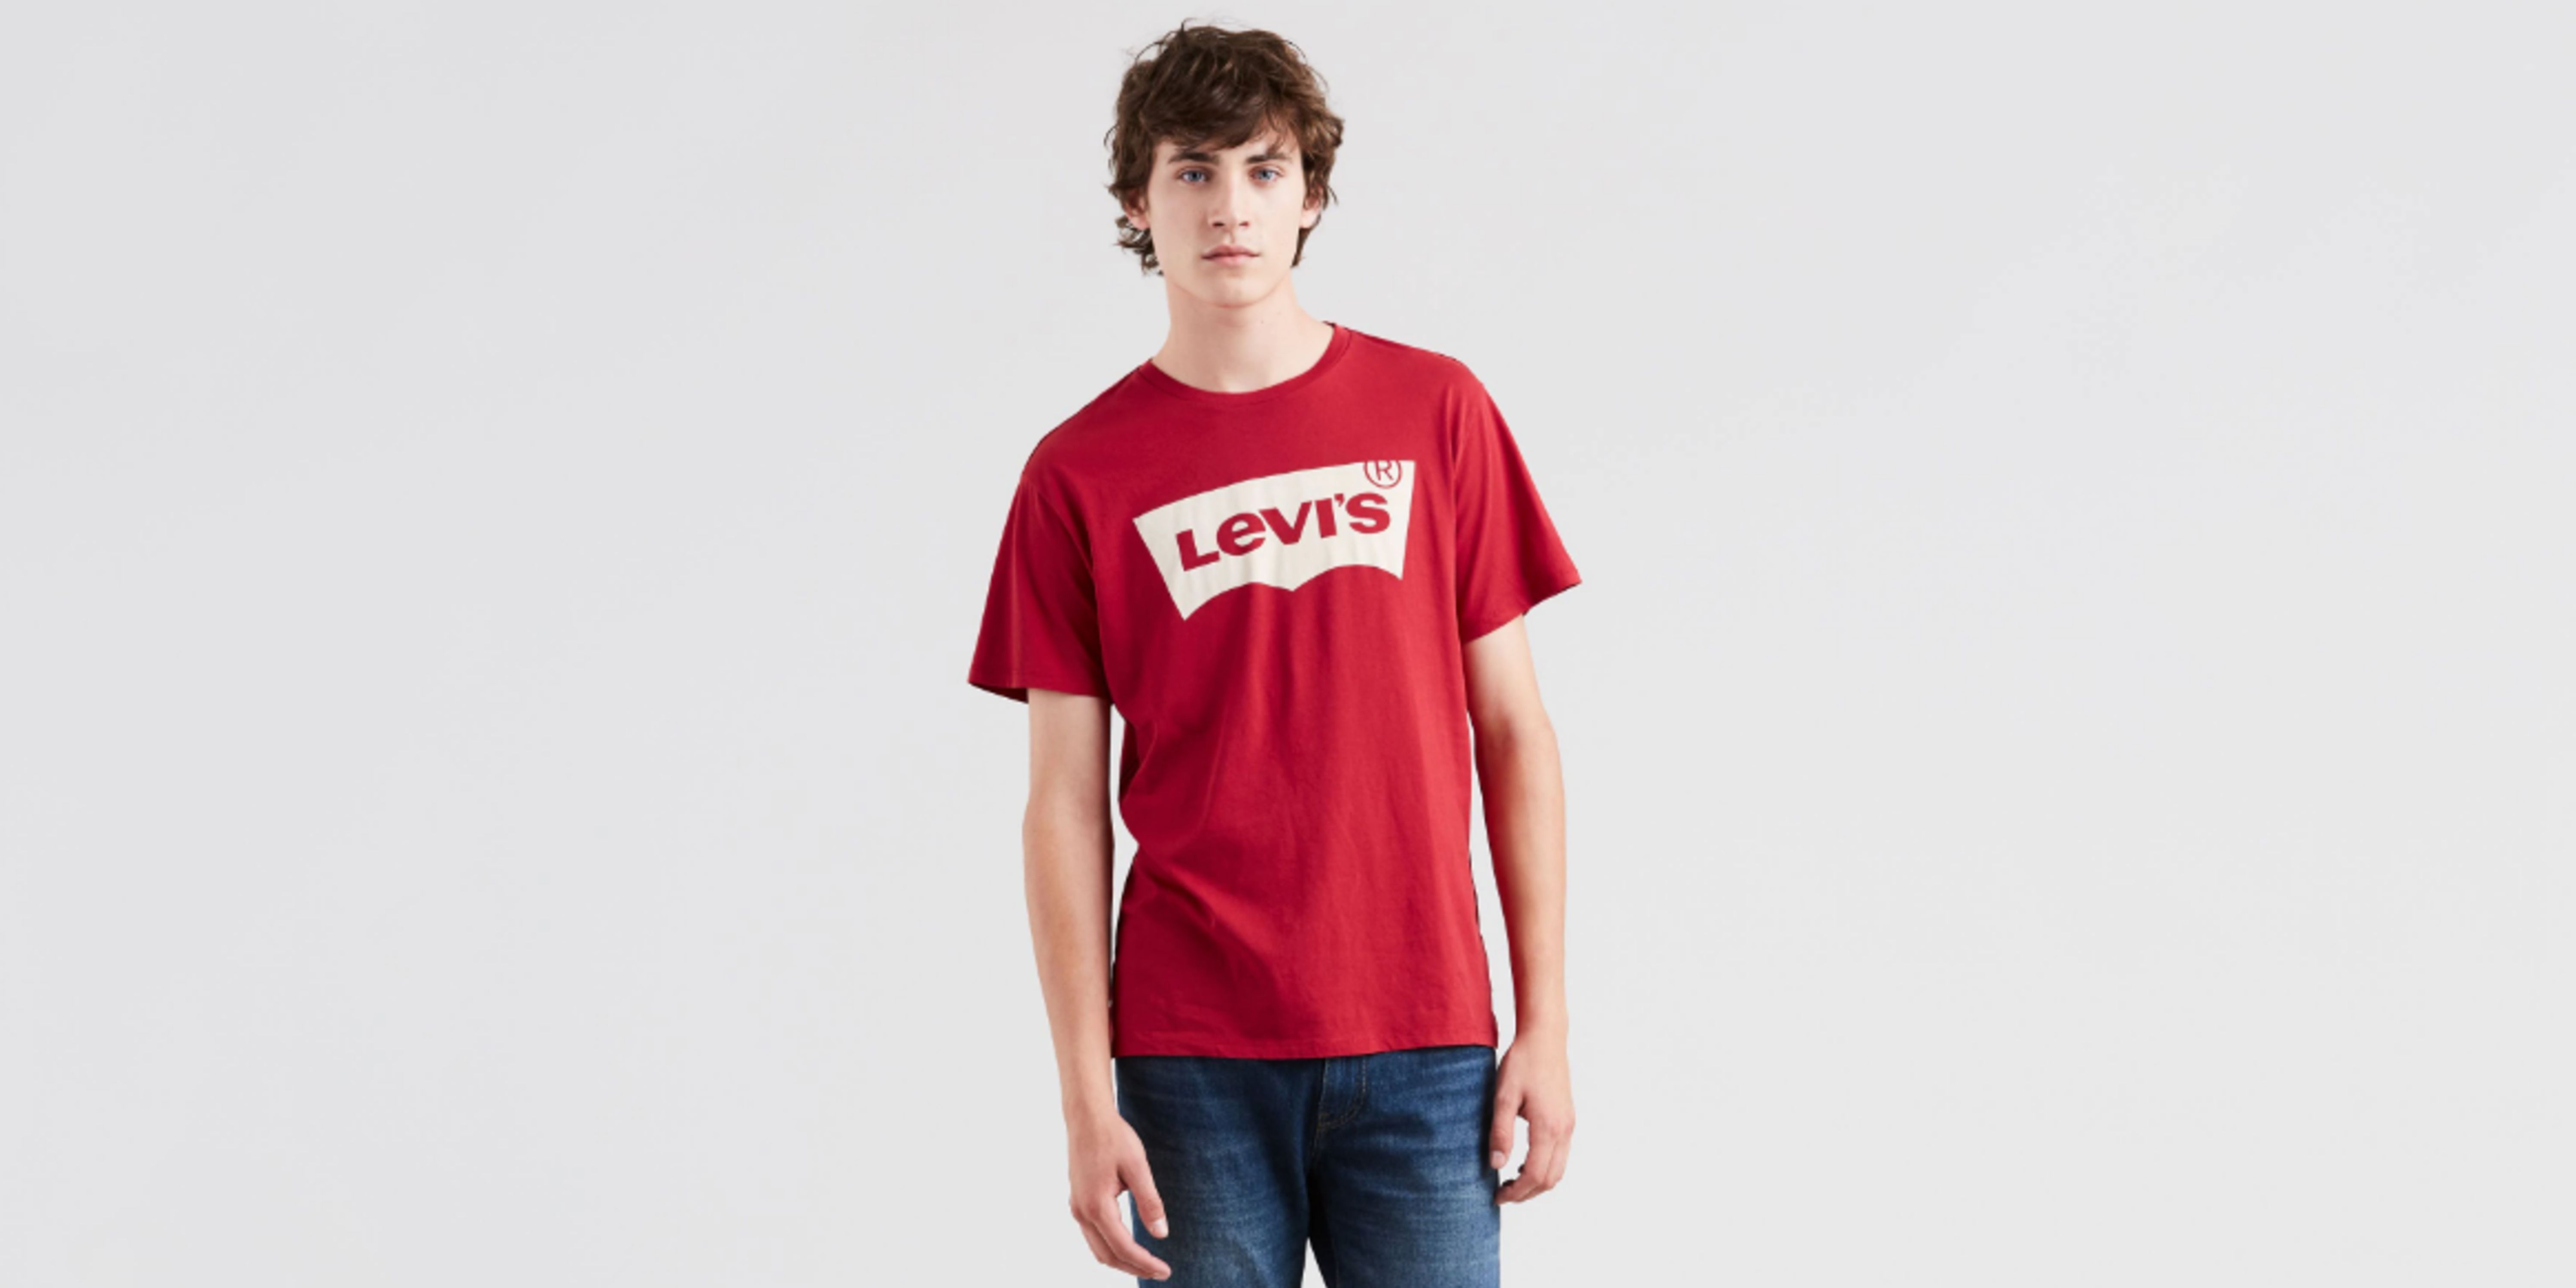 Venta > camiseta levi's hombre > en stock